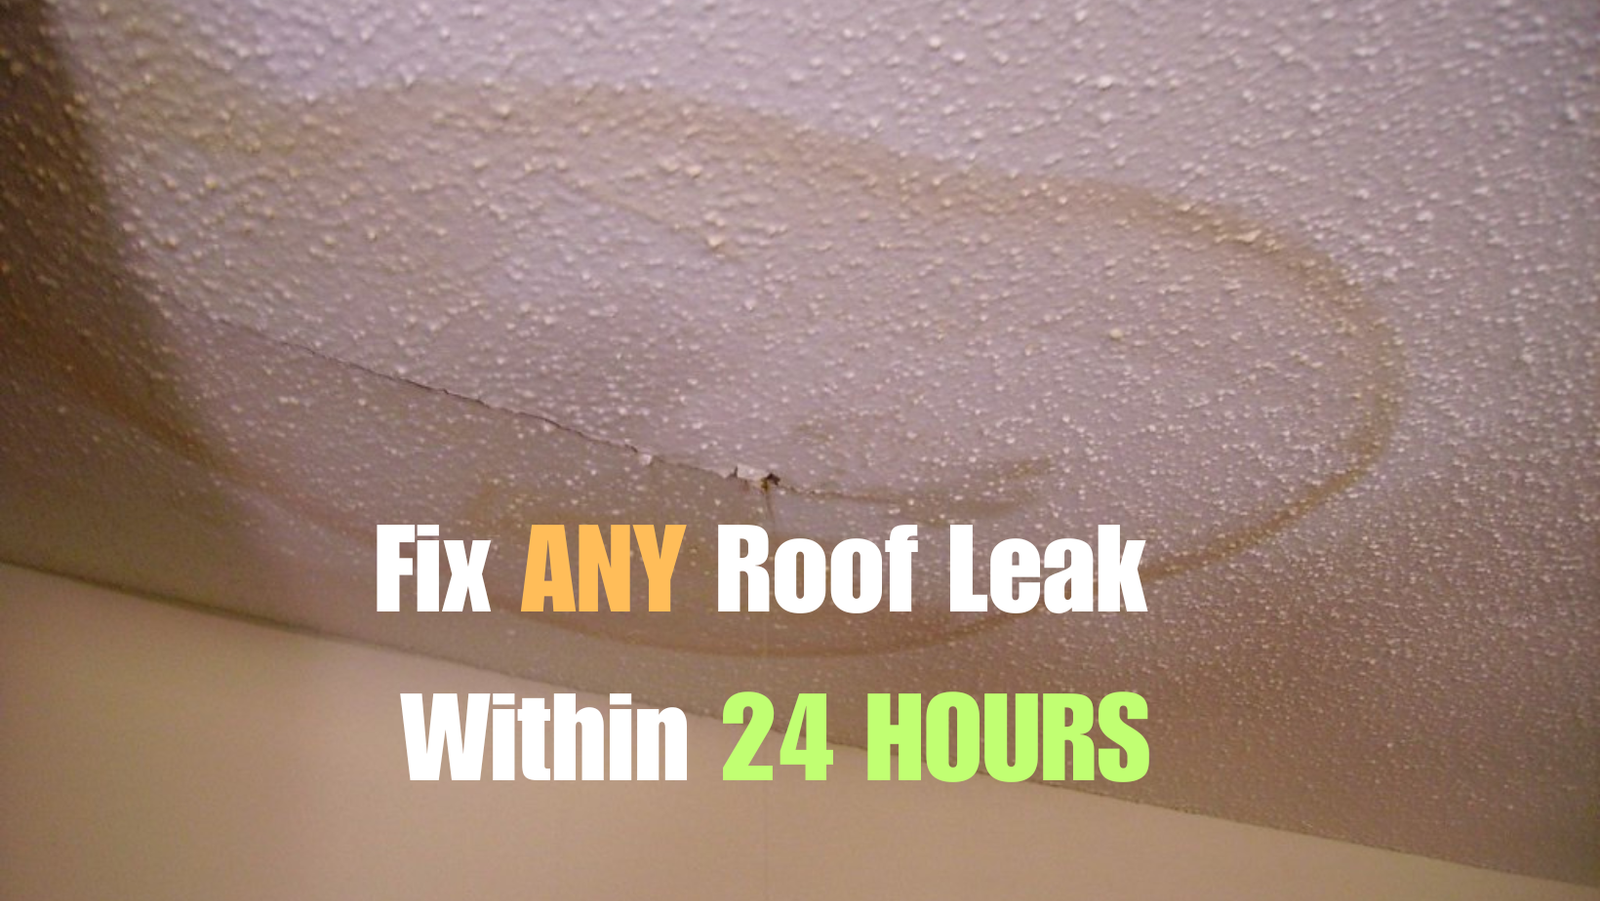 Roof Leak Ad Example